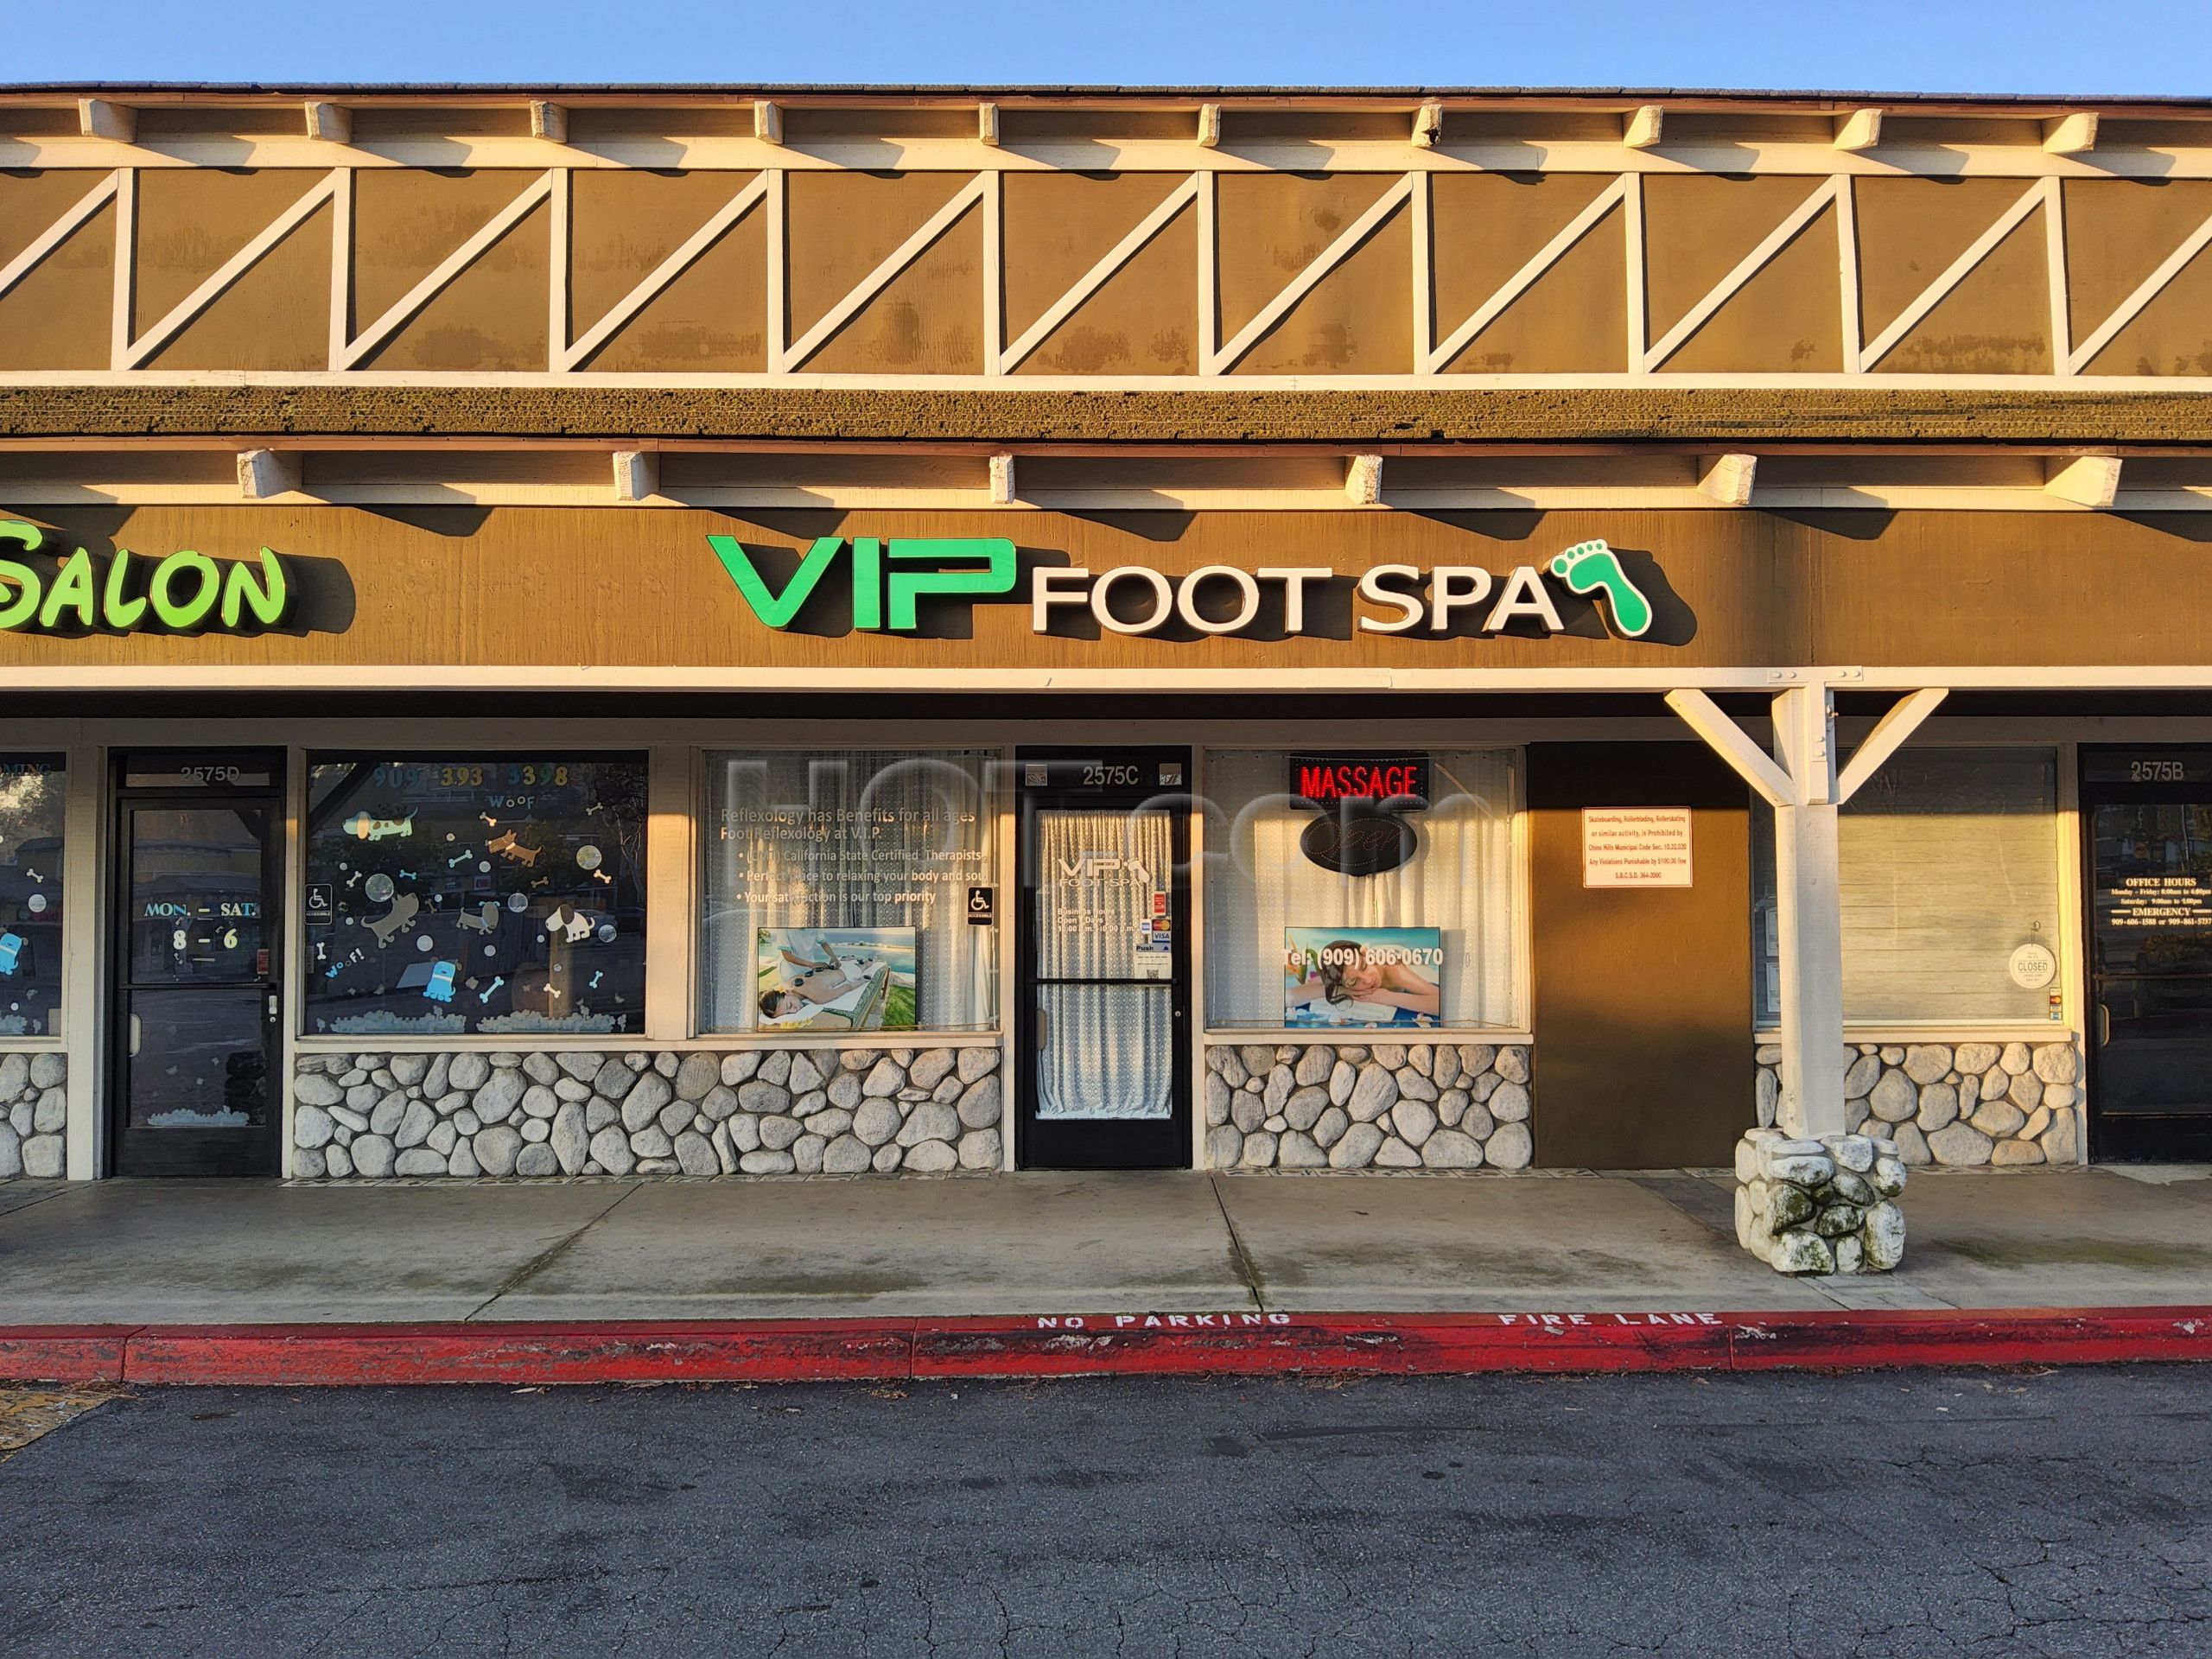 Chino Hills, California Vip Foot Spa & Massage